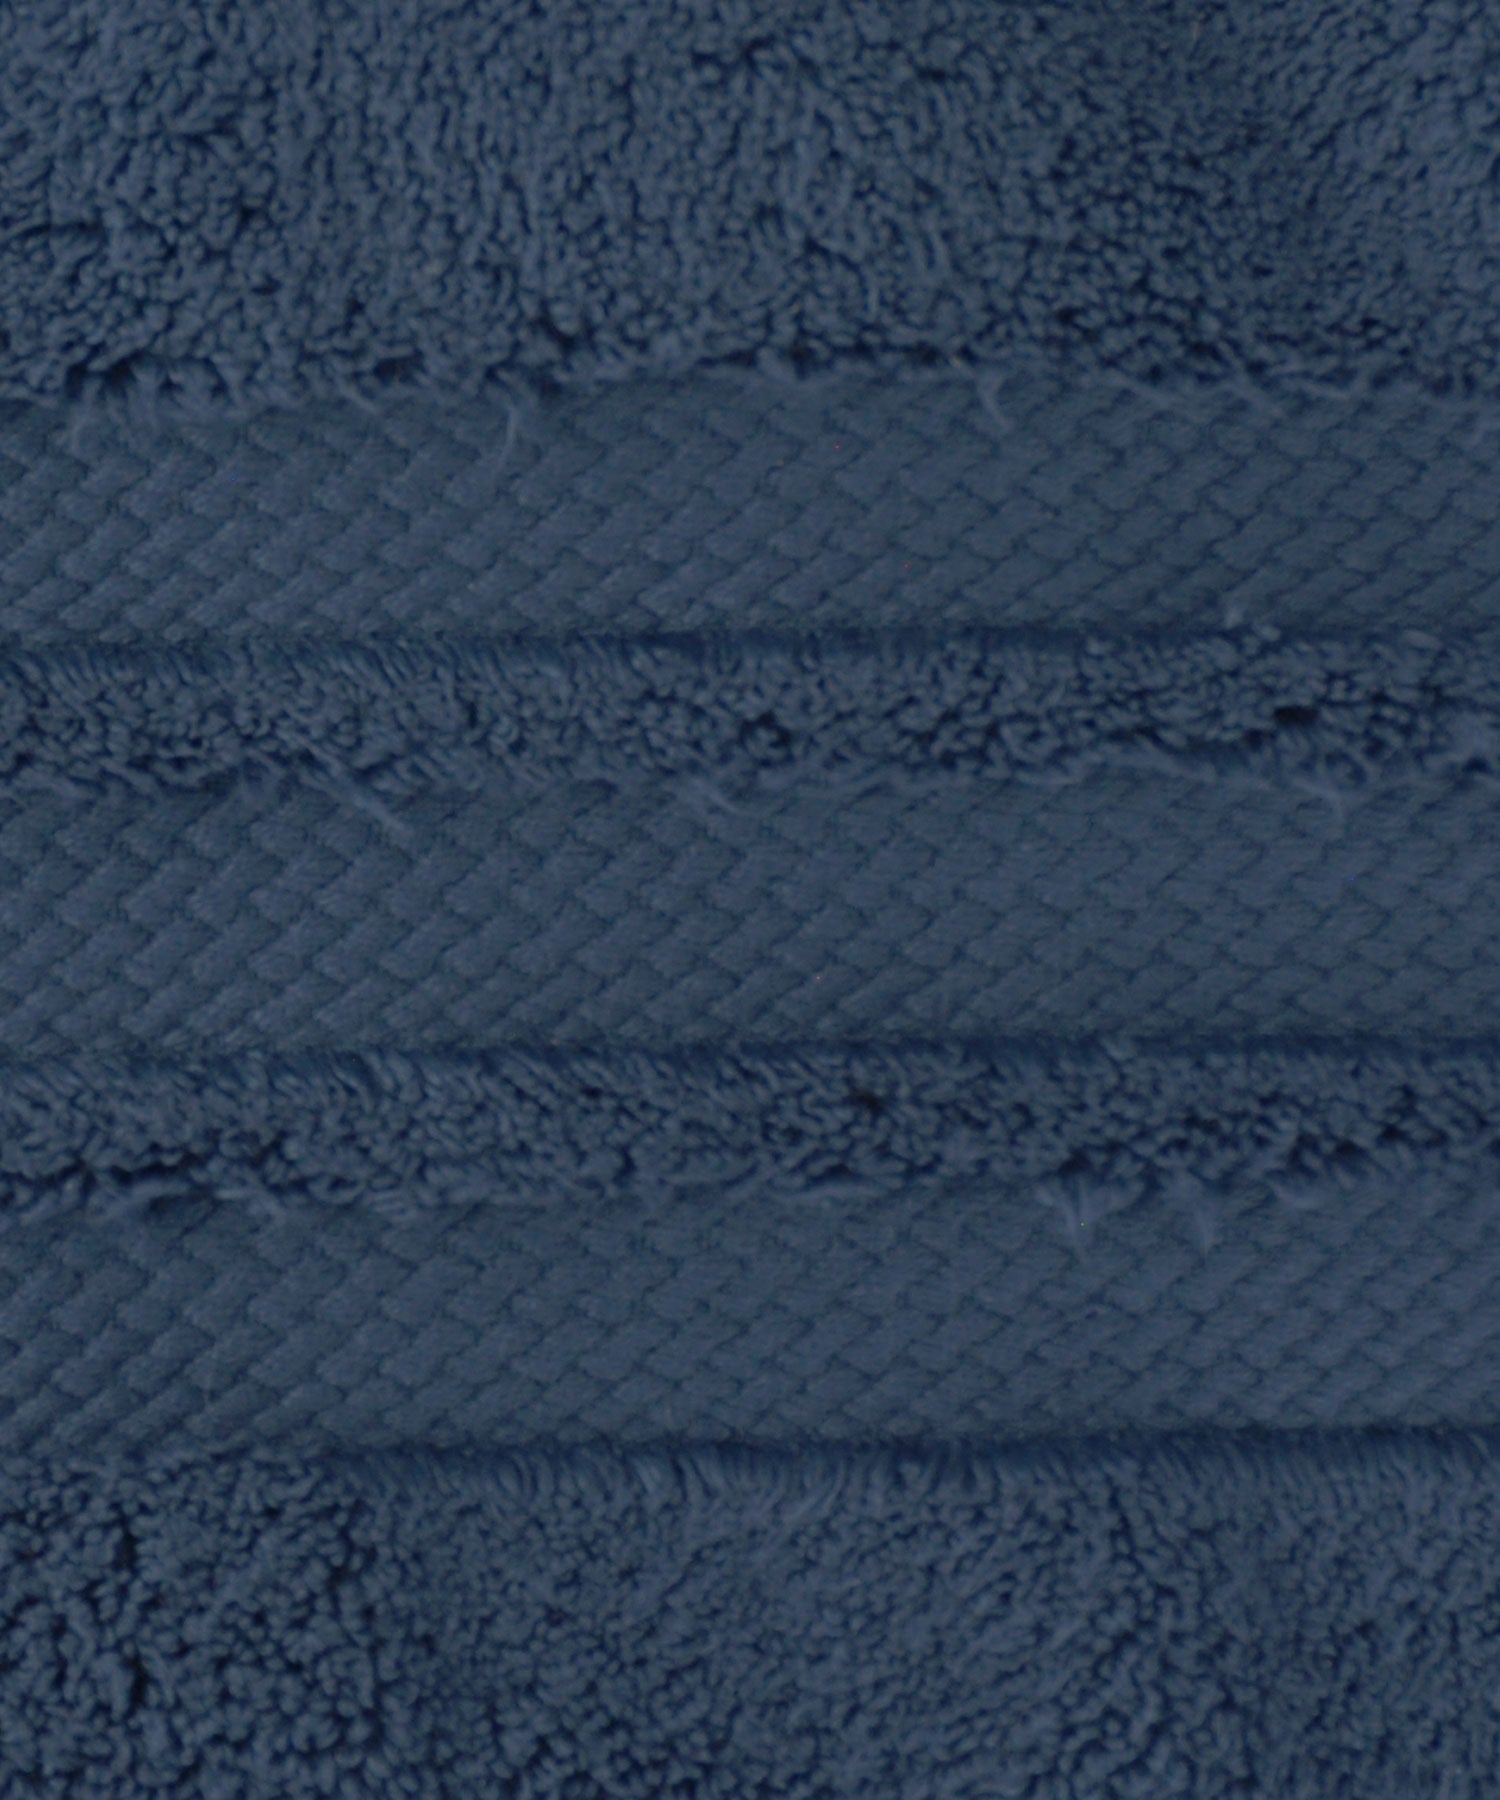 Finesse 1 Piece Bath Towel, 625 GSM, 100% Cotton, Peacock Blue Towel